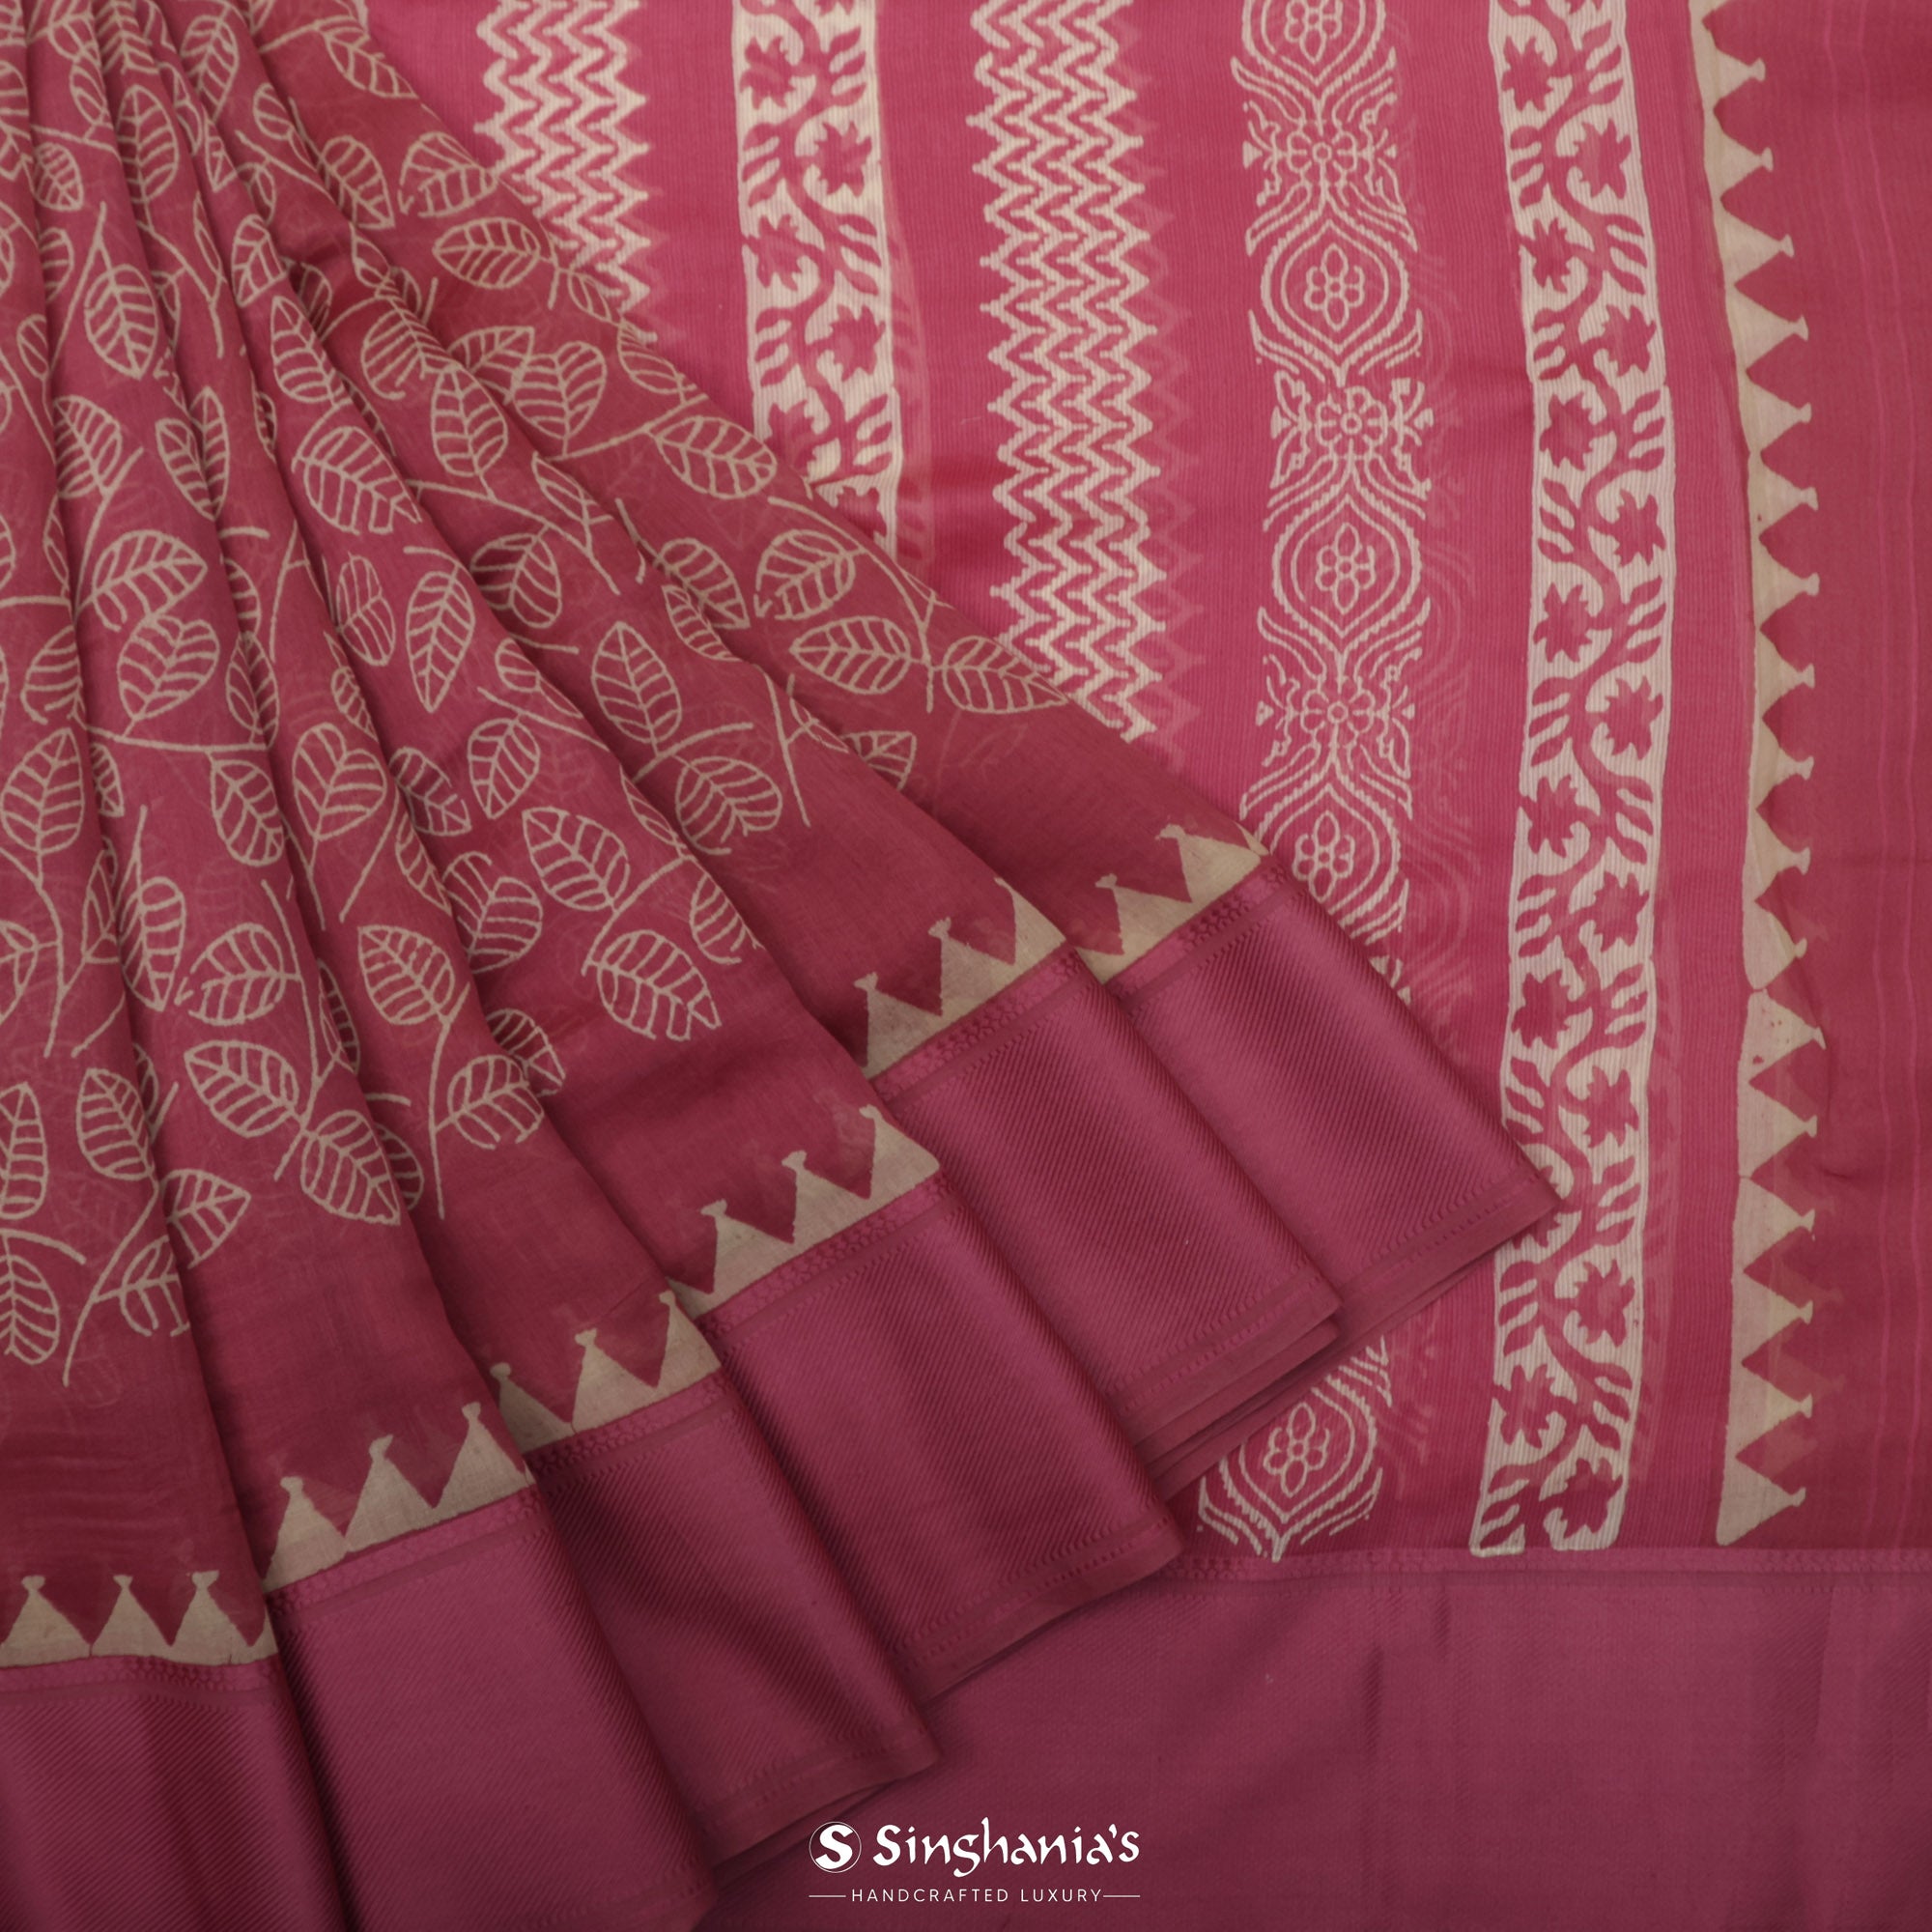 Rouge Pink Printed Chanderi Silk Saree With Floral Jaal Design